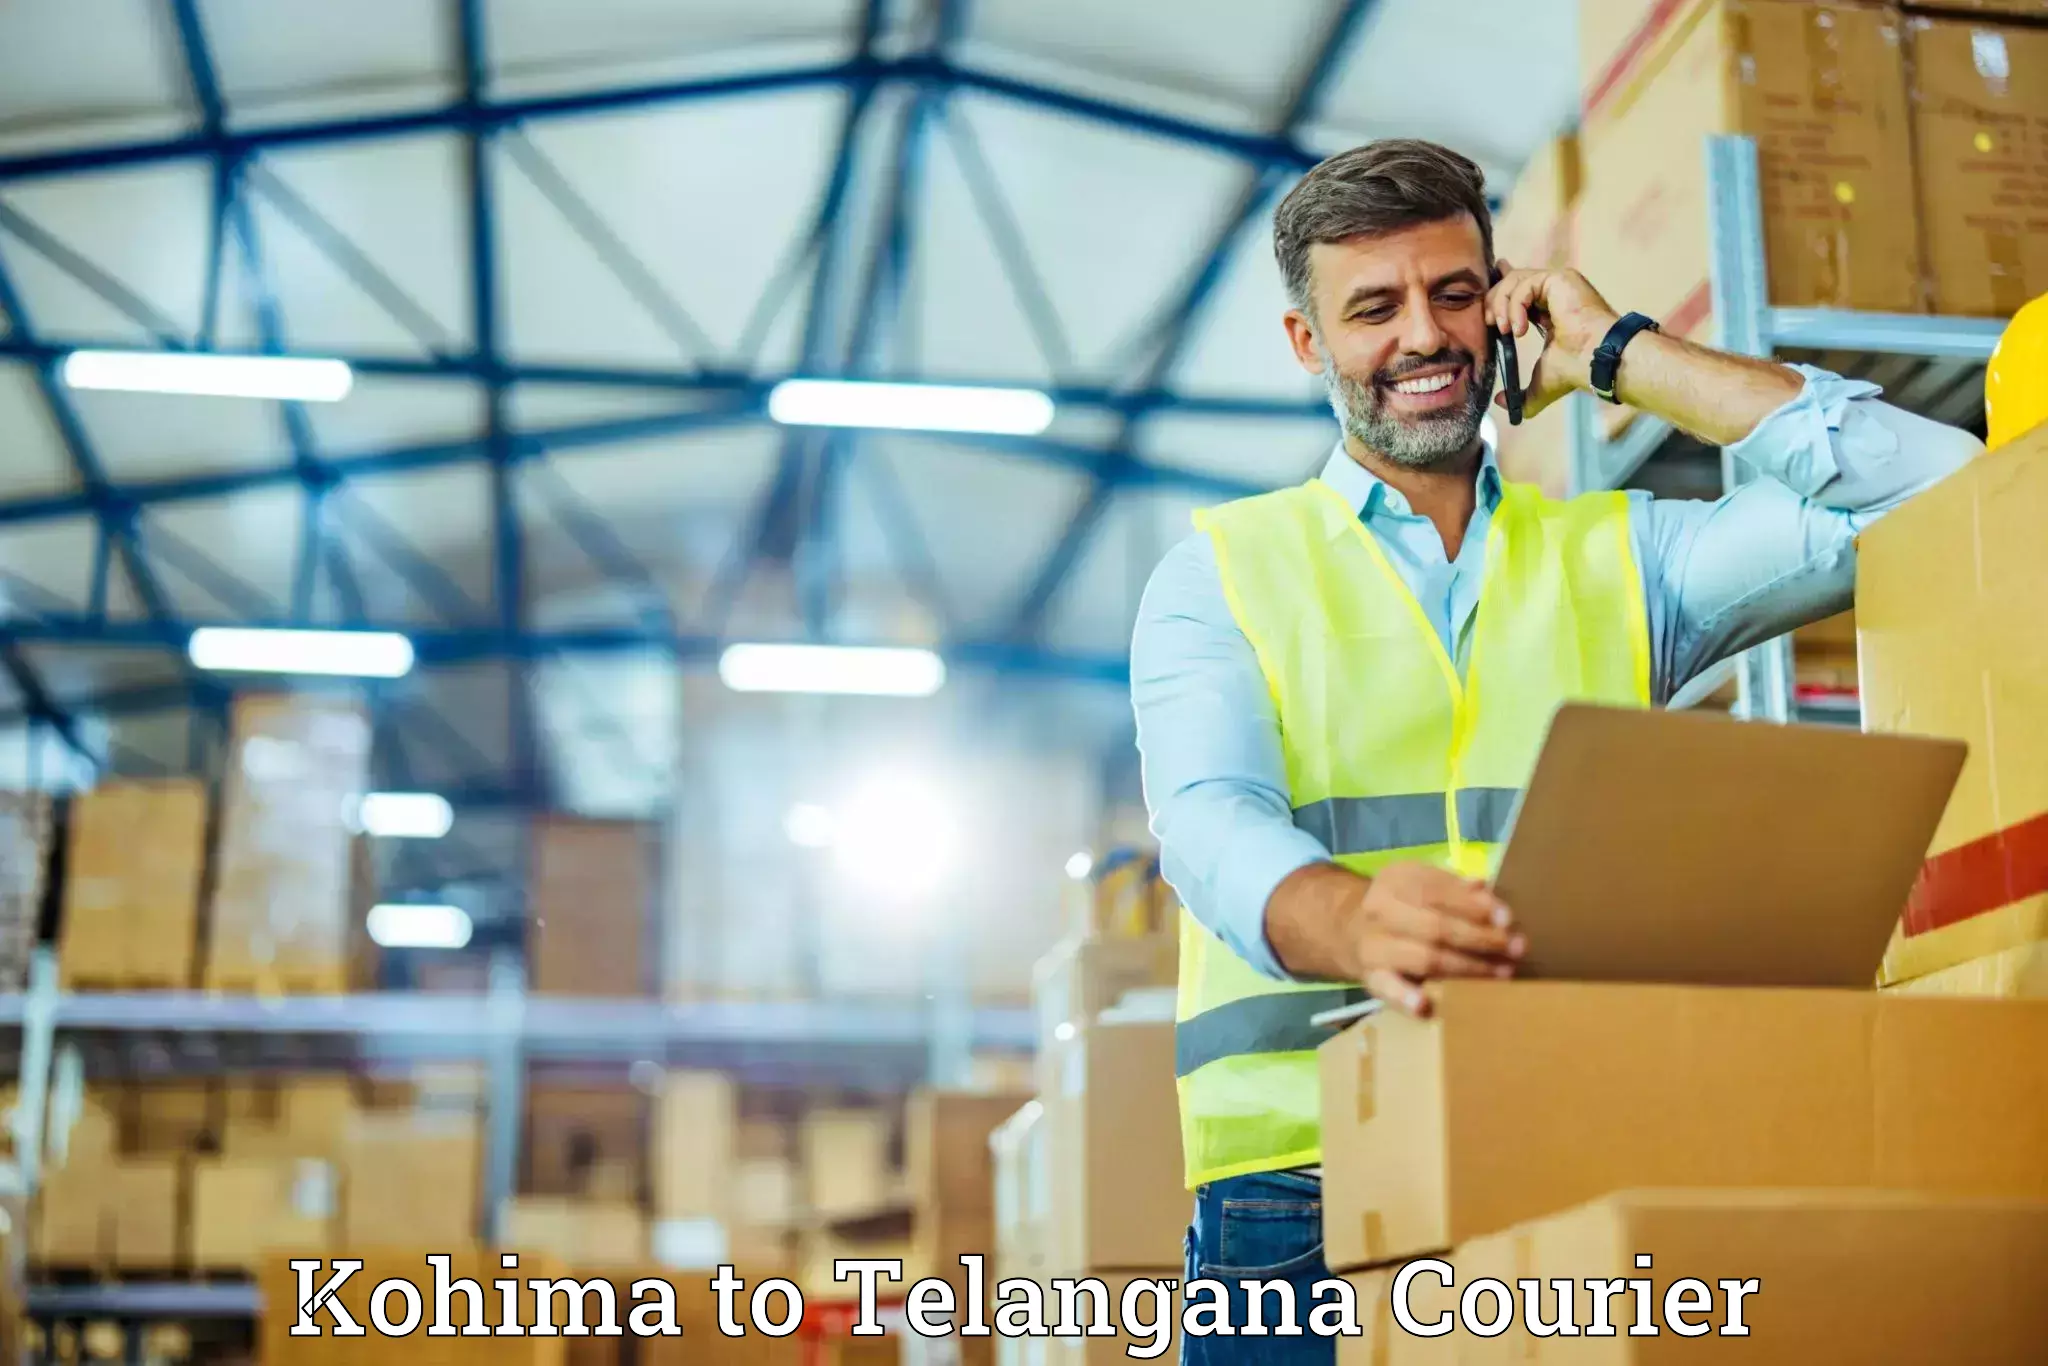 Professional moving company Kohima to Siddipet